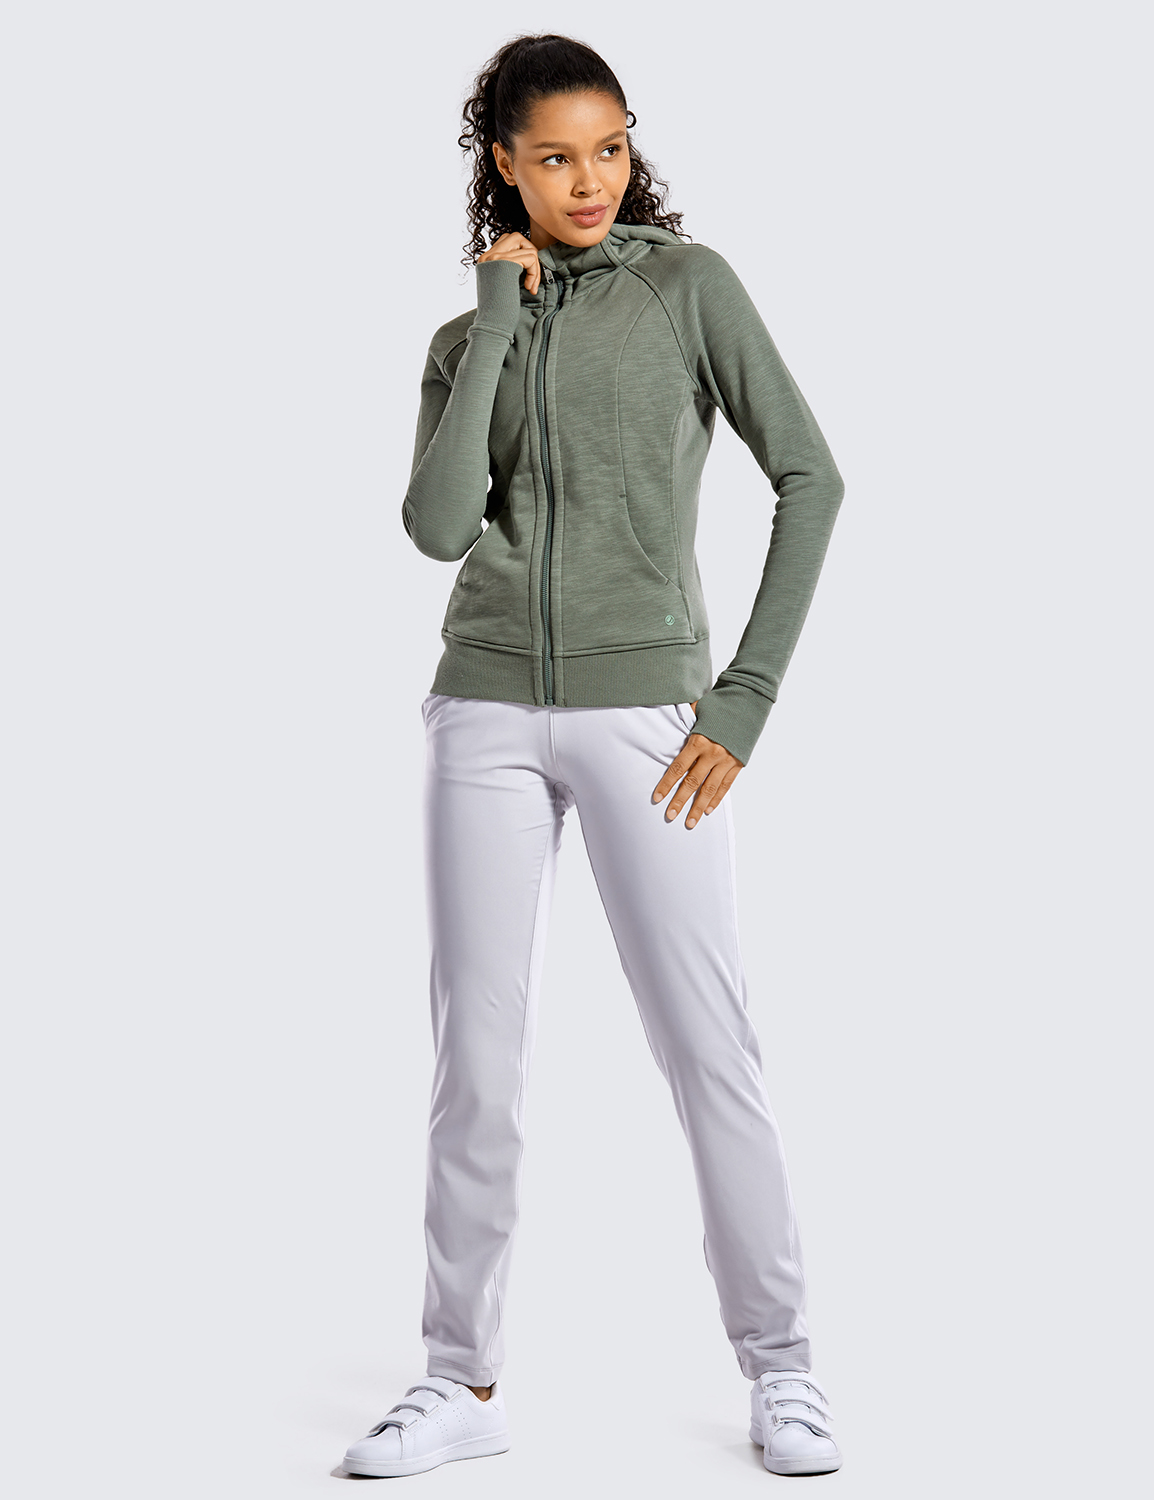 CRZ YOGA Women Cotton Hoodies Sport Jackets Sweatshirt Workout Full Zip ...